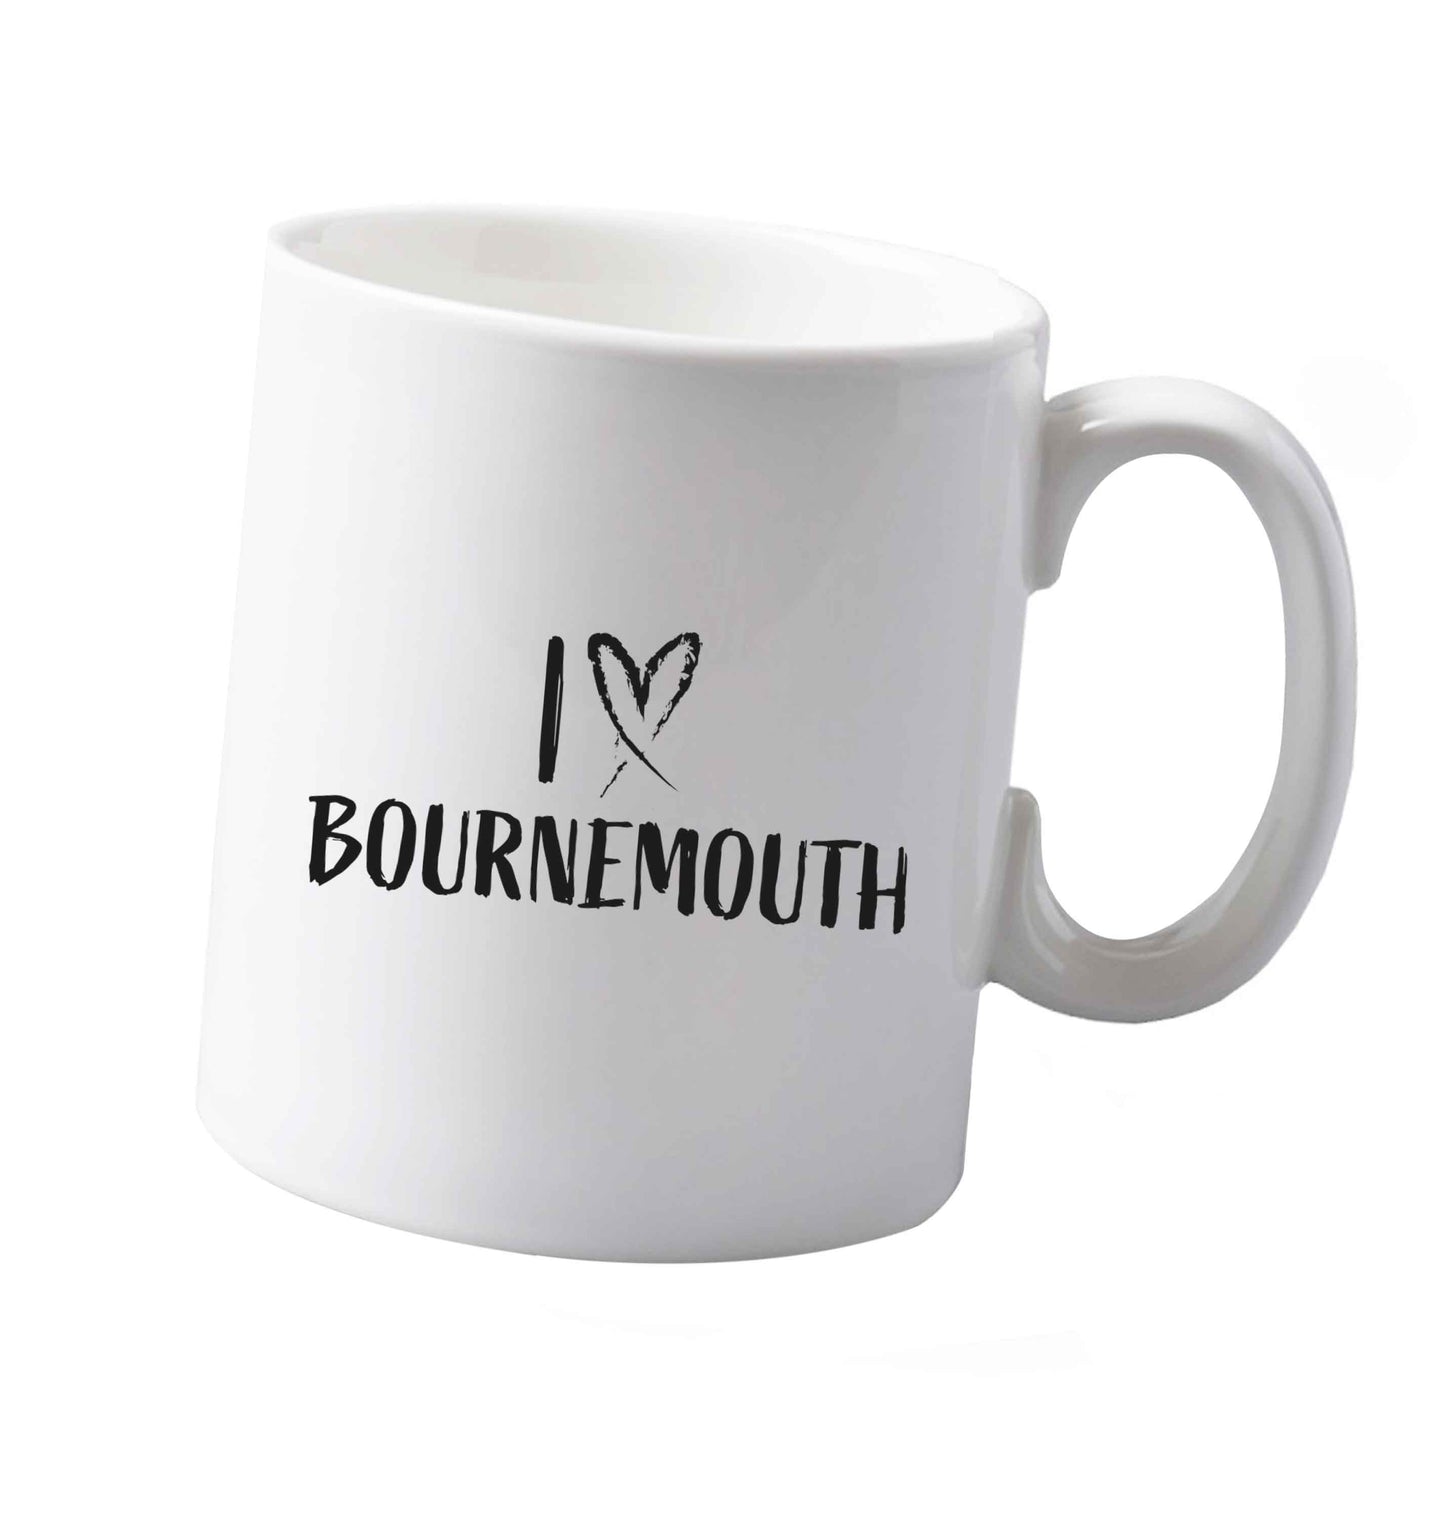 10 oz I love Bournemouth ceramic mug both sides